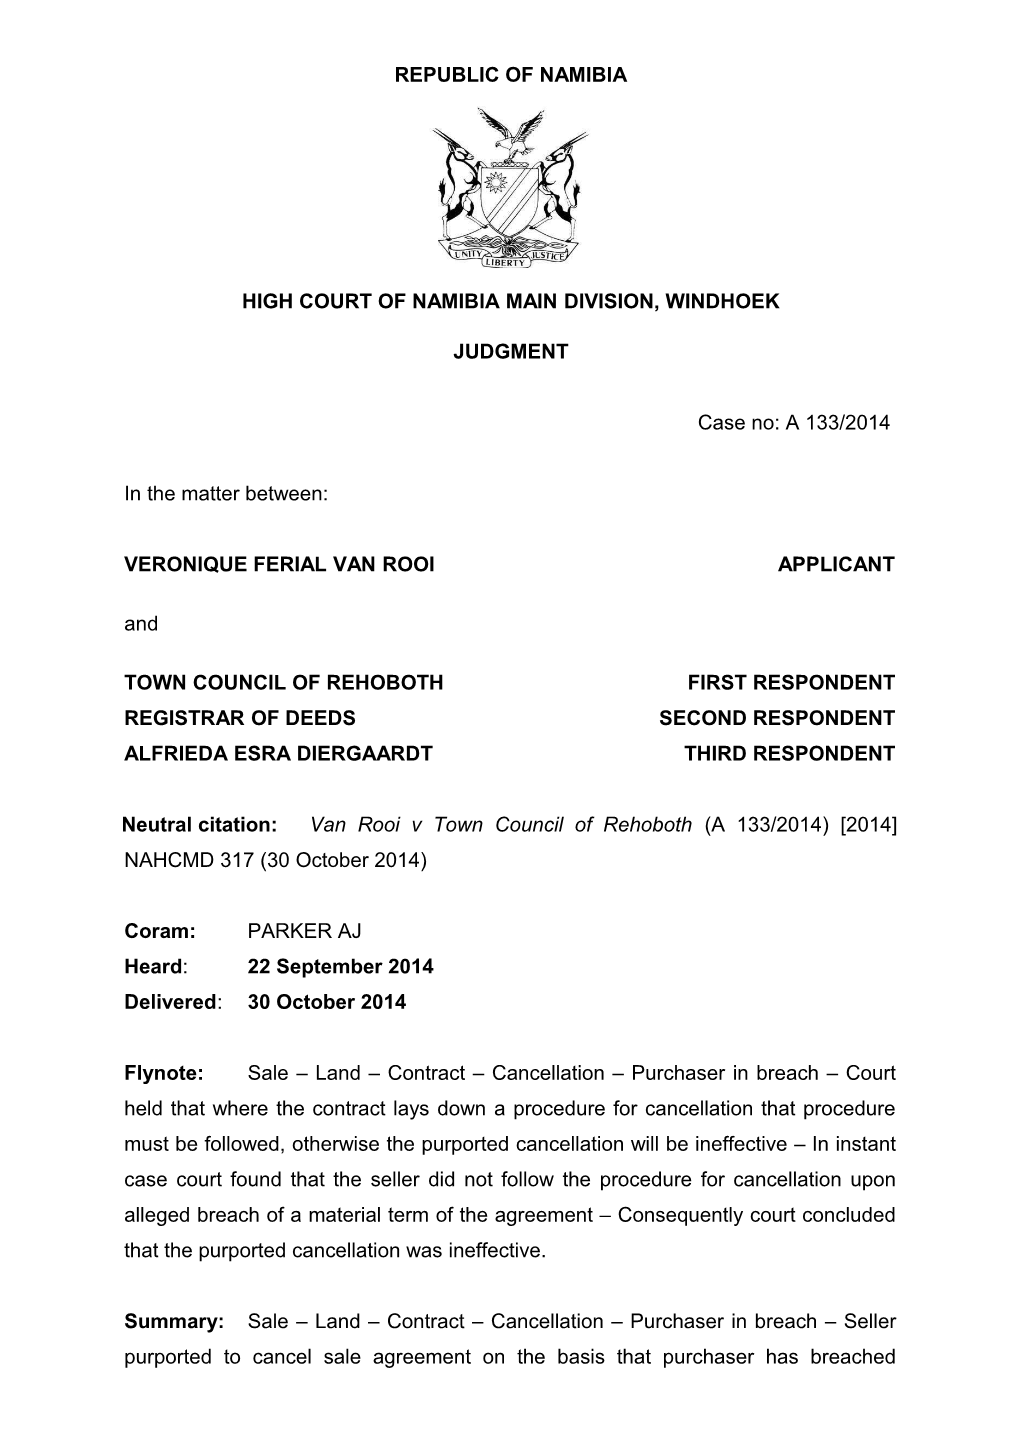 Van Rooi V Town Council of Rehoboth (A 133-2014) 2014 NAHCMD 317 (30 October 2014)